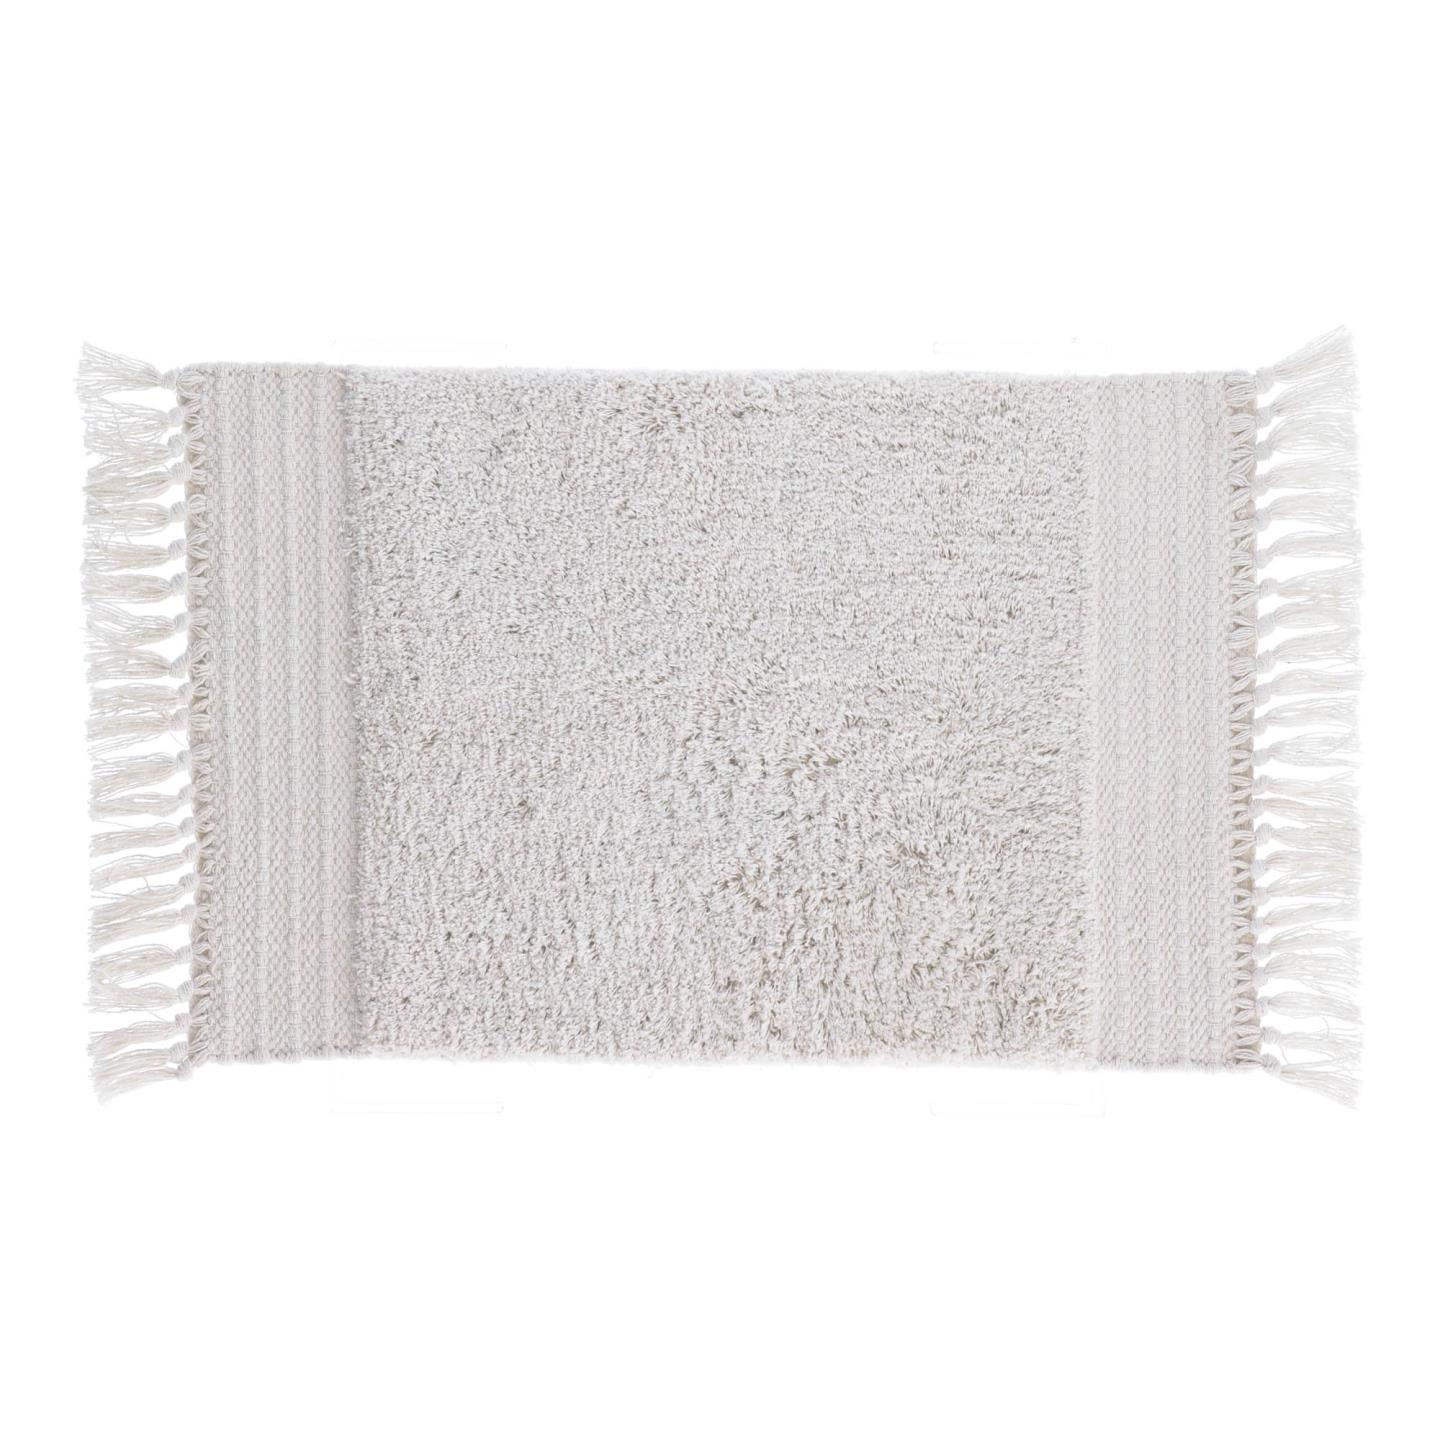 LAFORMA Nilce bademåtte, rektangulær - hvid stof (40x60)